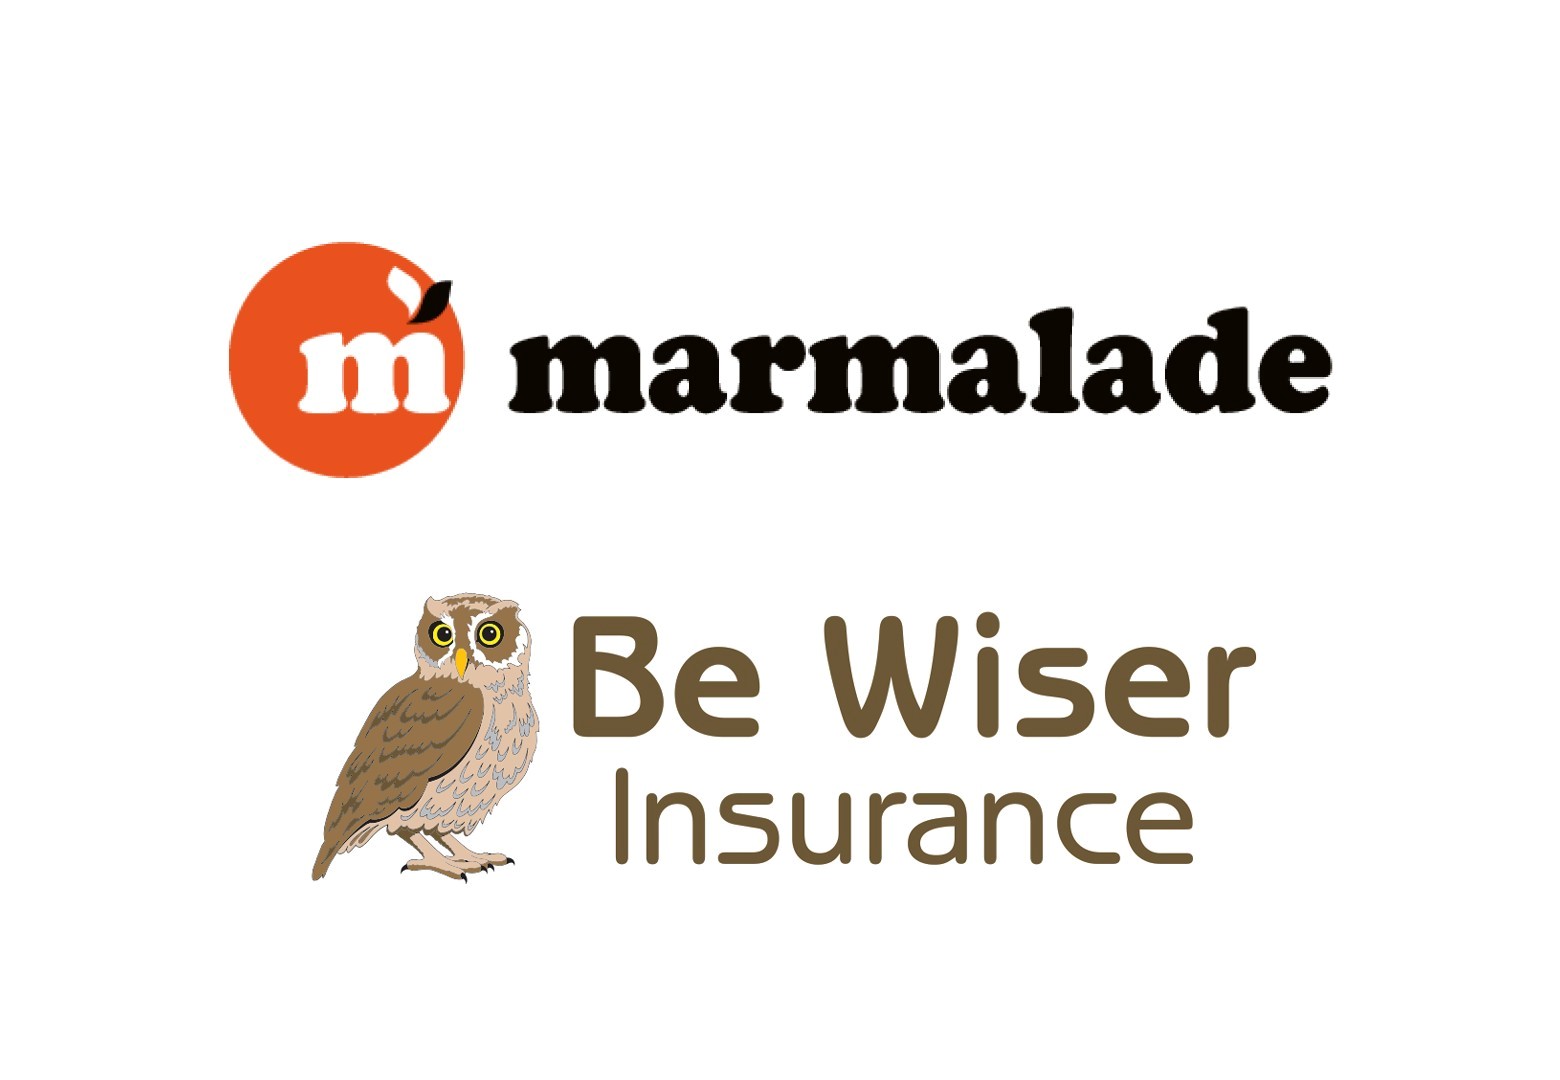 Marmalade and Be Wiser logos.